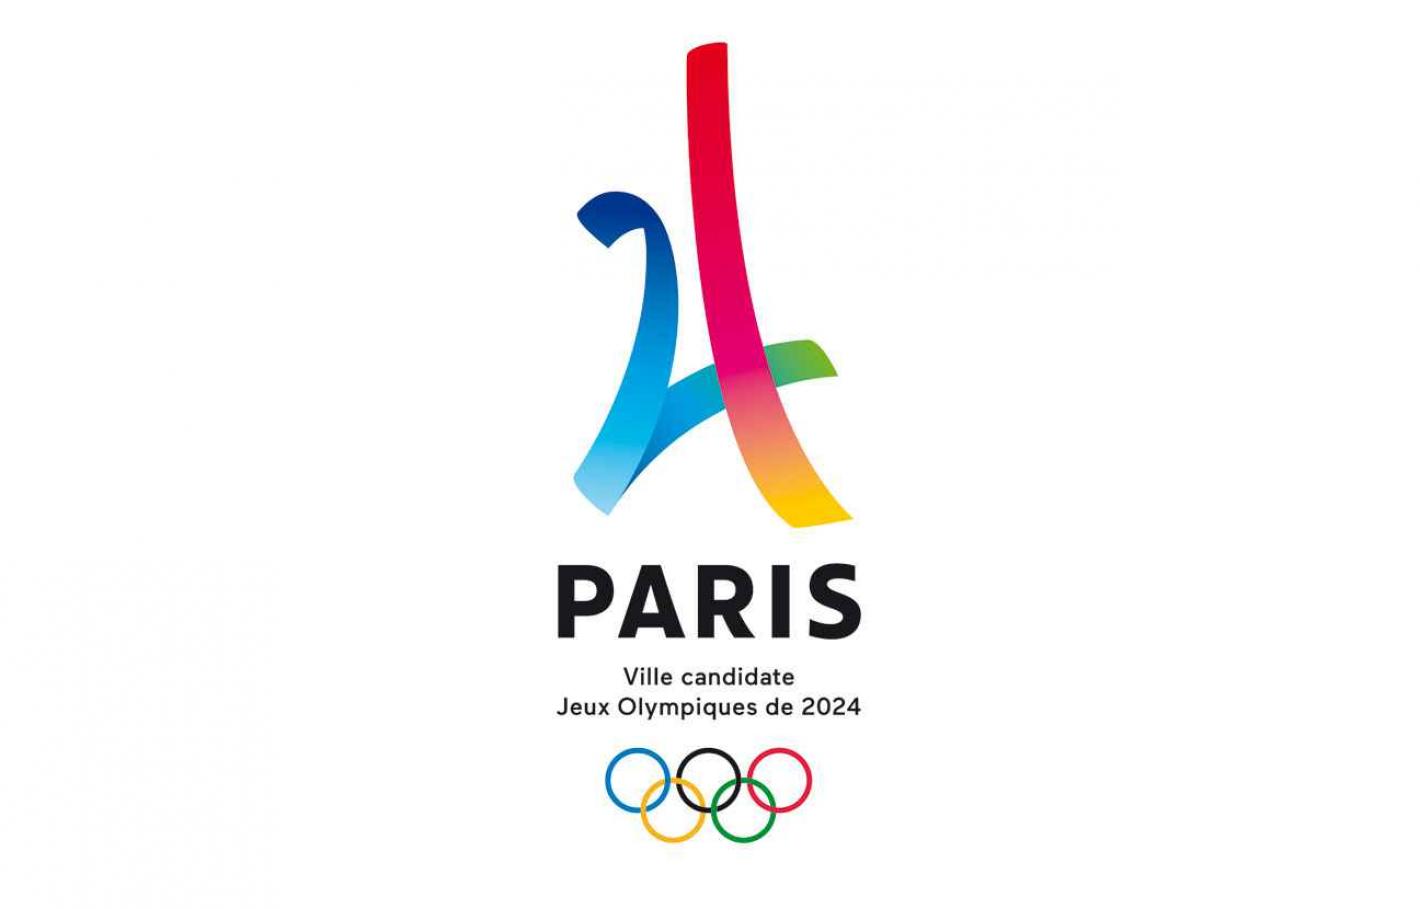 images/friuli_venezia_giulia/2019/medium/2048x1536-fit_logo-devoile-mardi-9-fevrier-accompagnera-candidature-paris-jeux-olympiques-2024-jusqu-13-septembre-2017.jpg